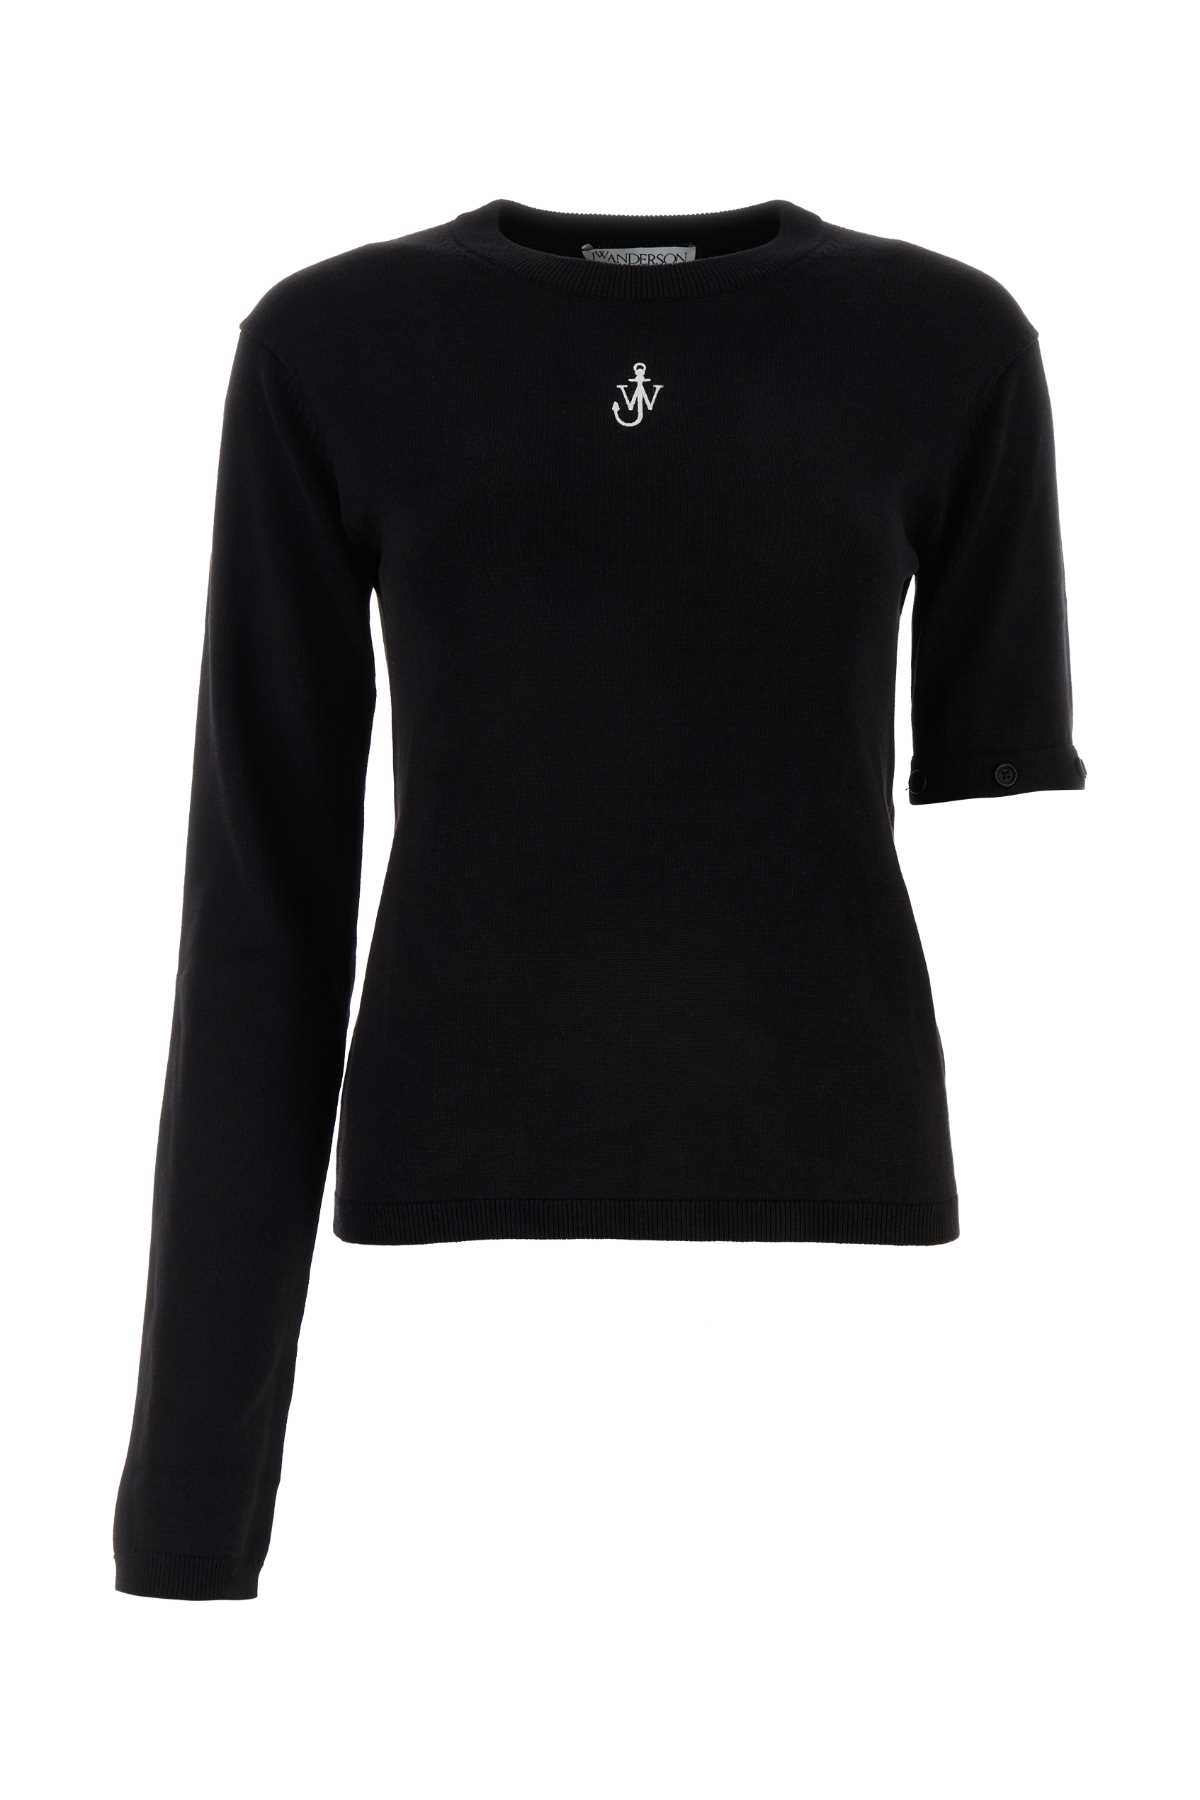 J.W. Anderson Black Silk Blend Sweater